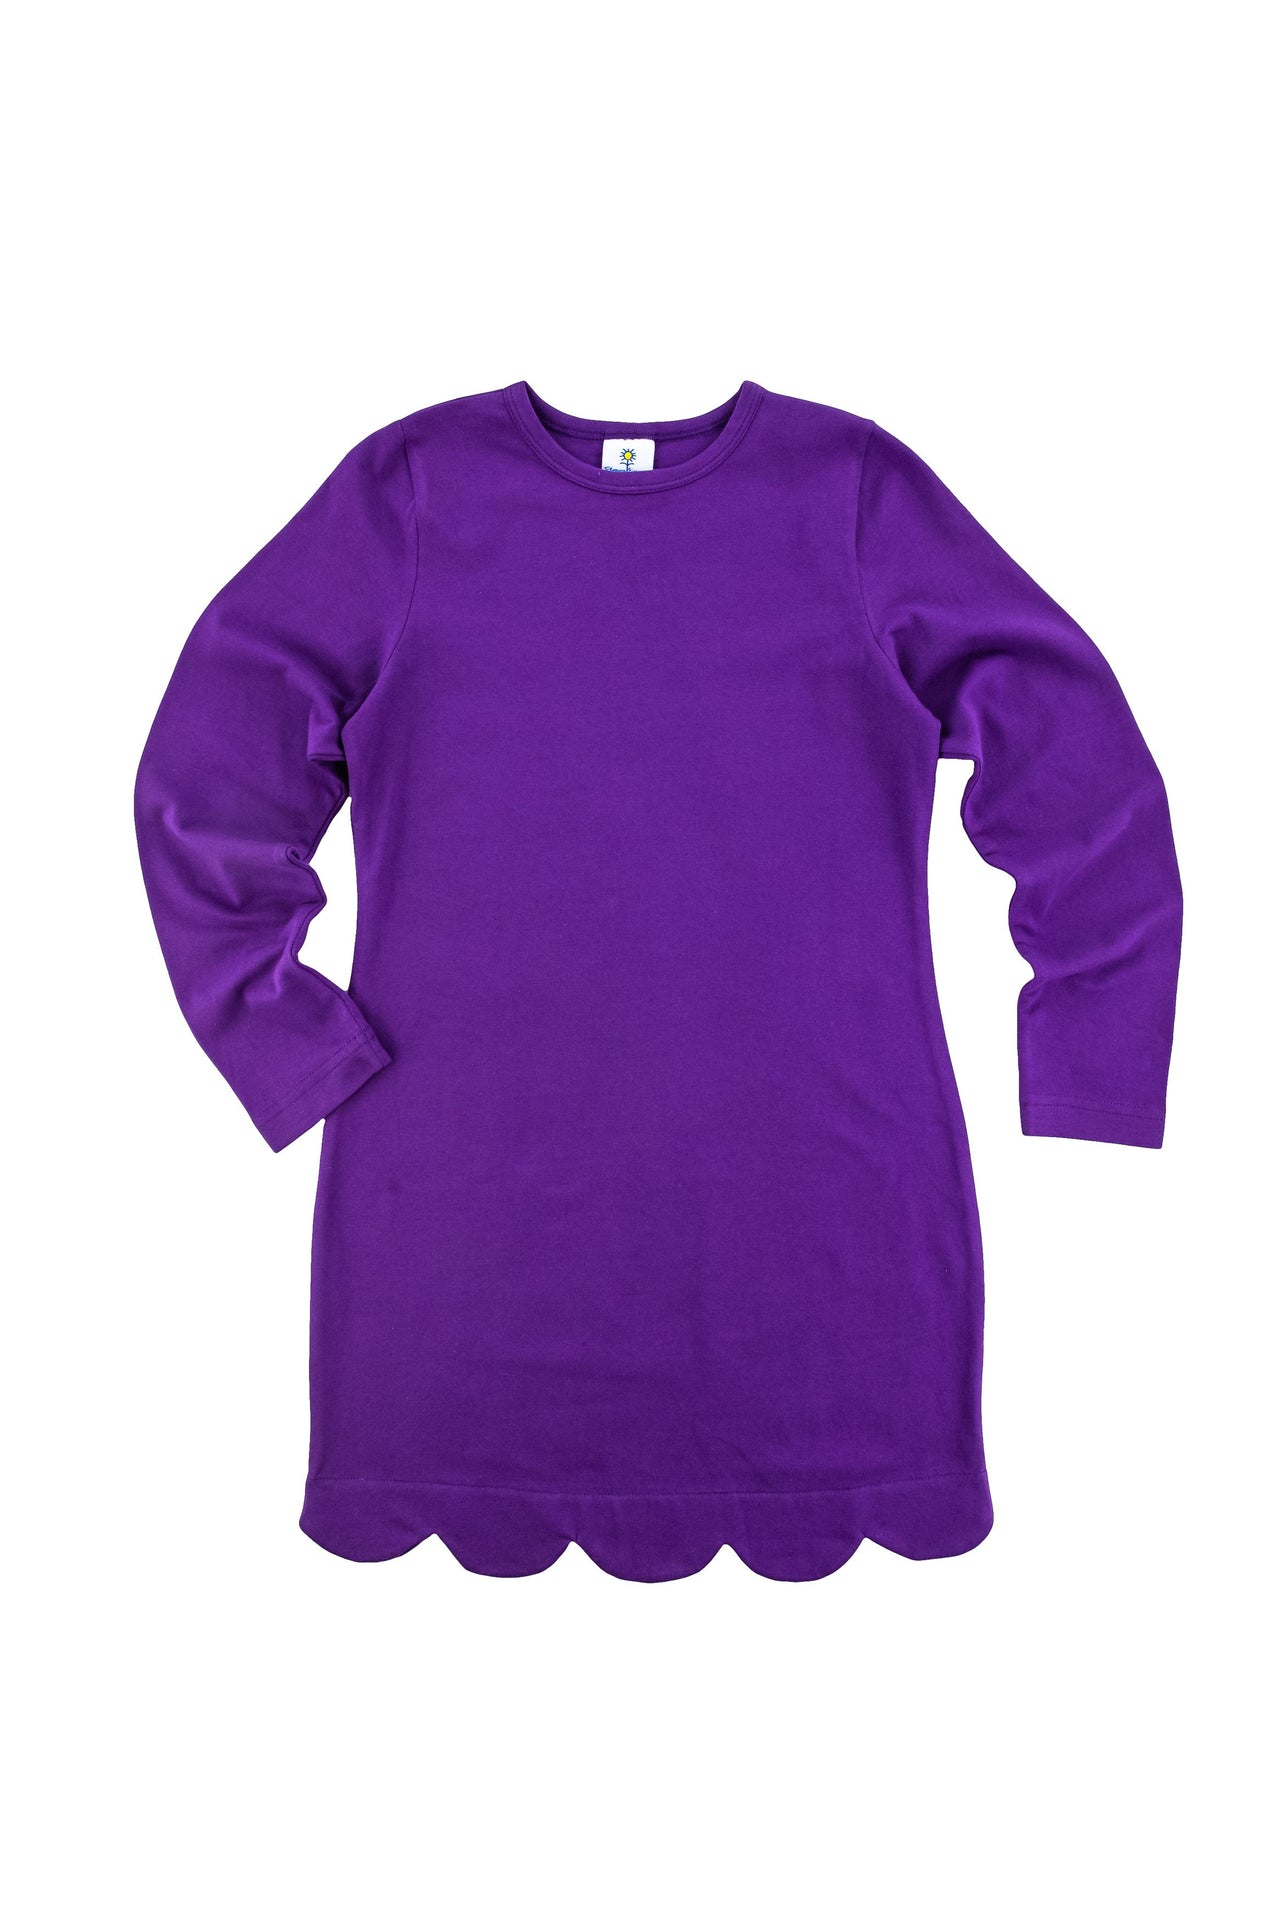 Florence Eiseman Purple Knit Dress W/Scallop Hem F5008 5006